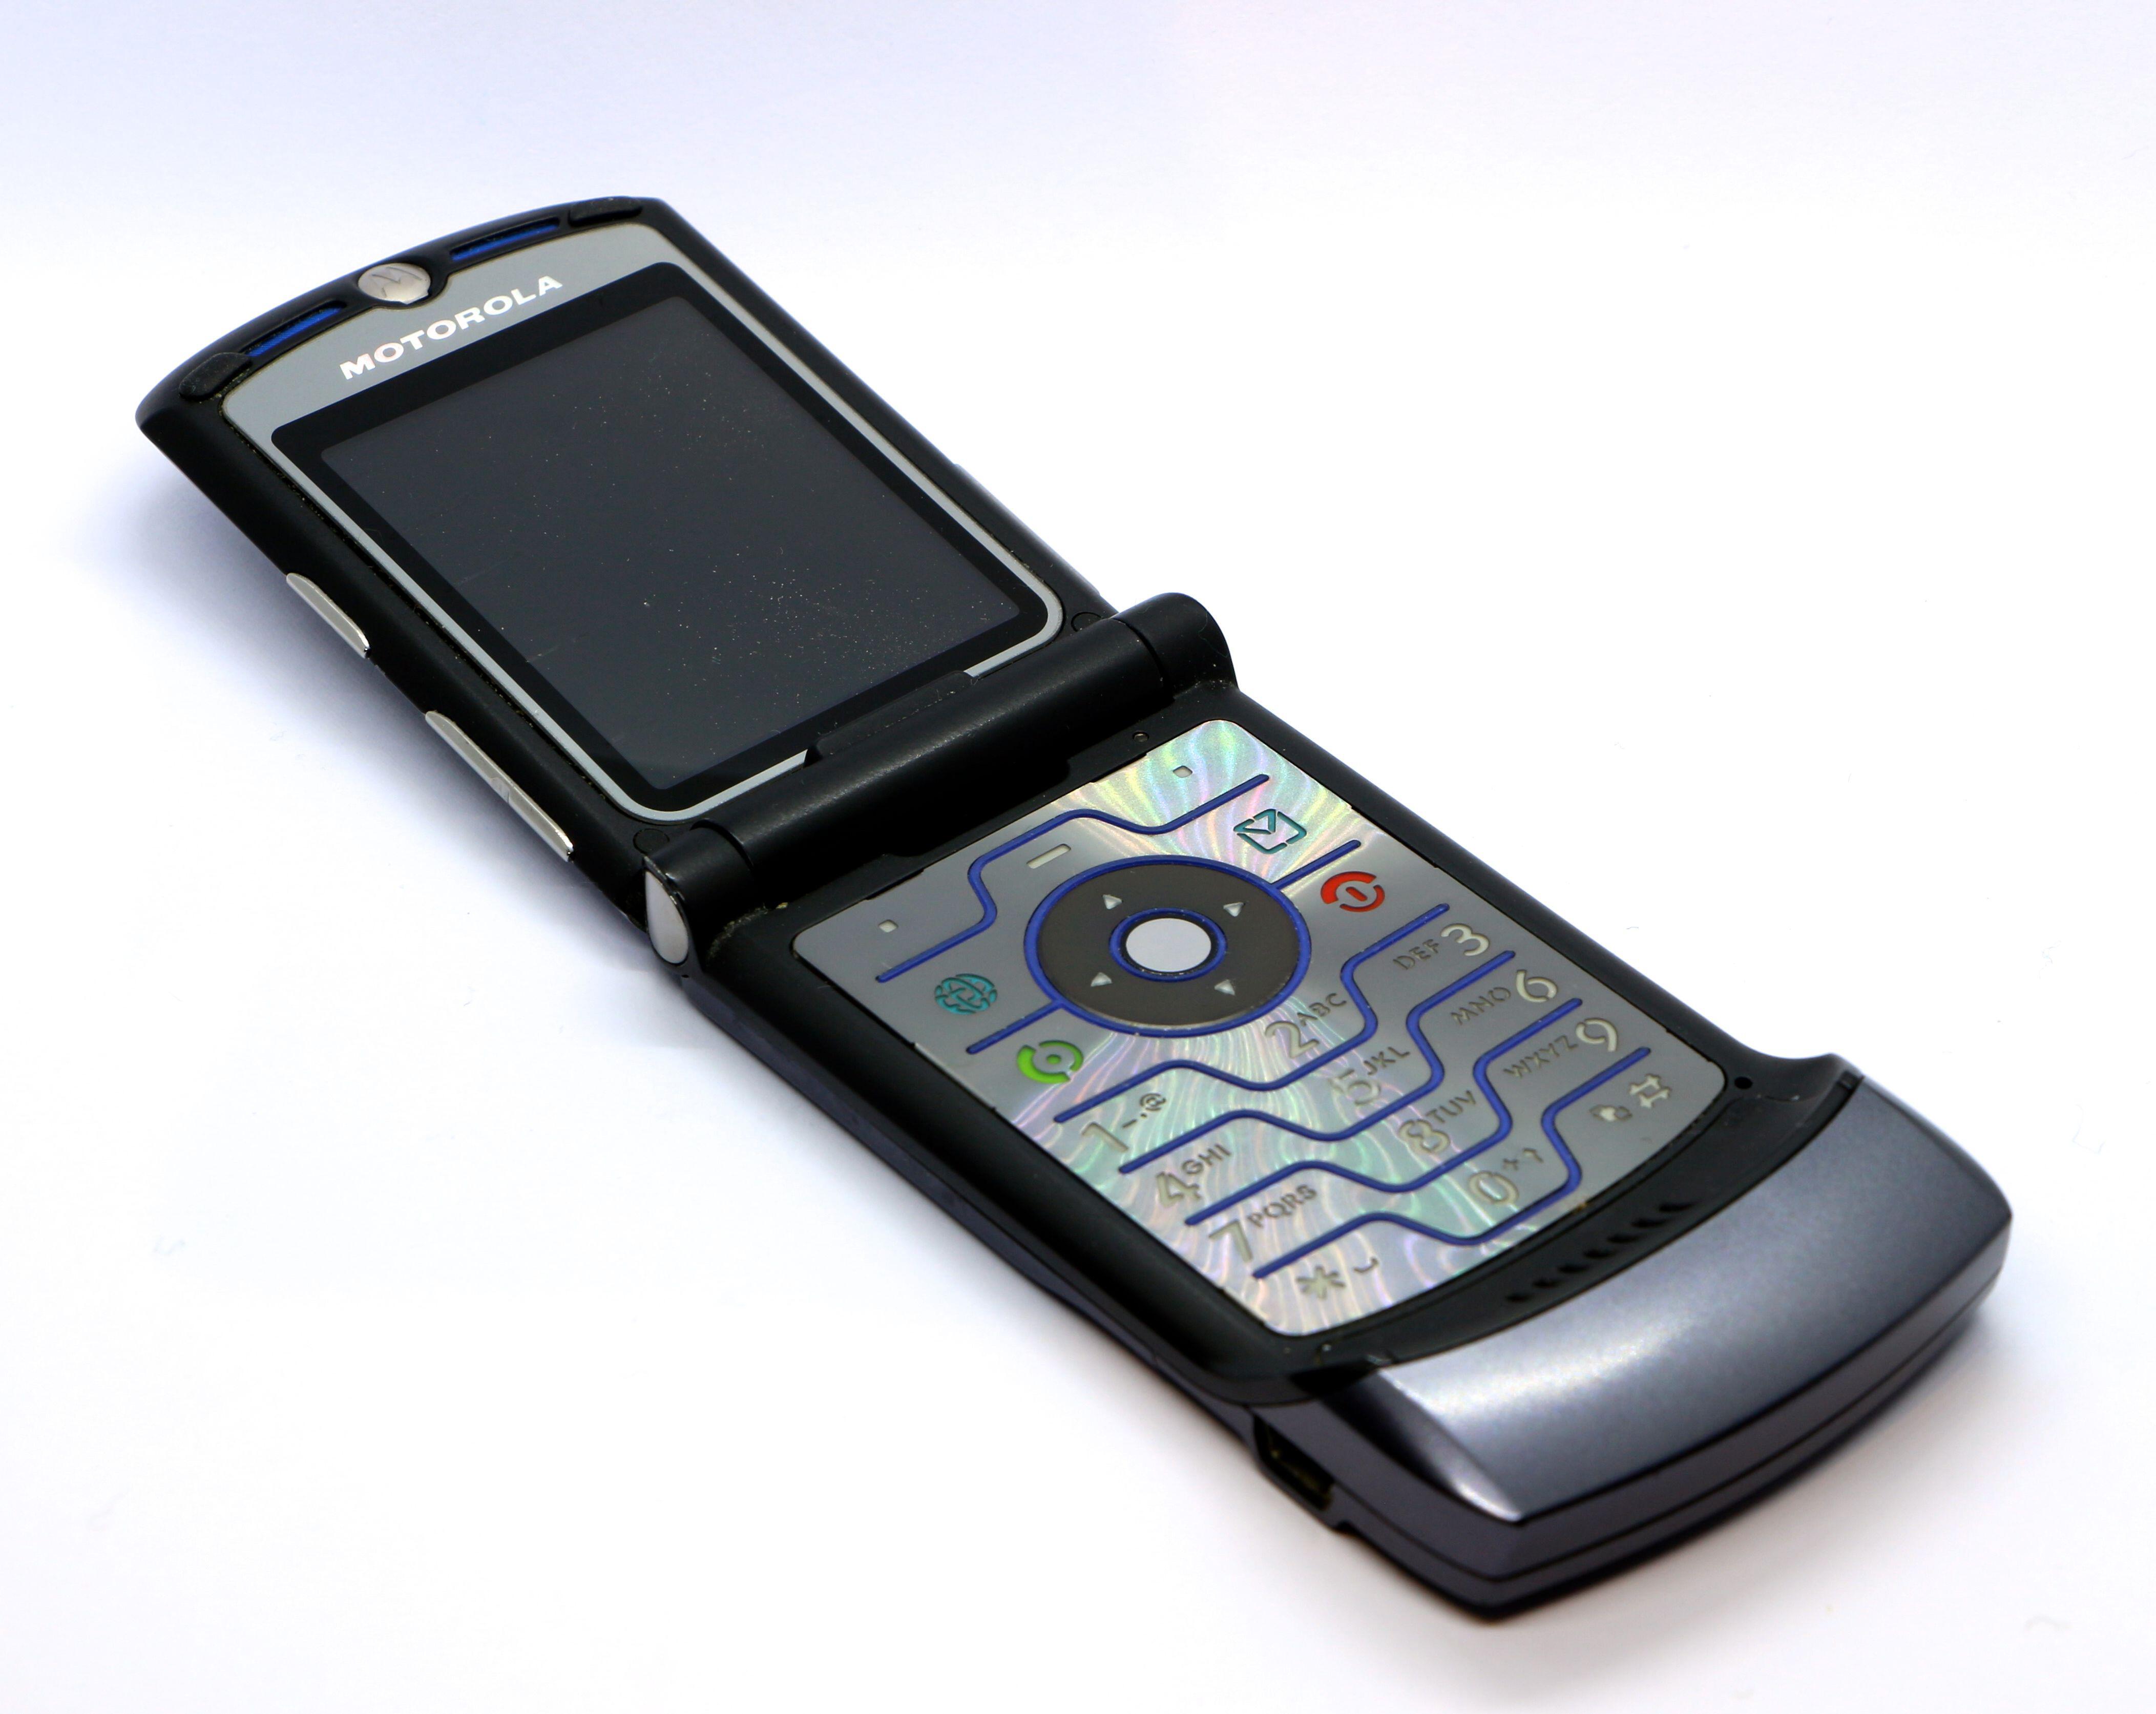 The Motorola RAZR flip phone 